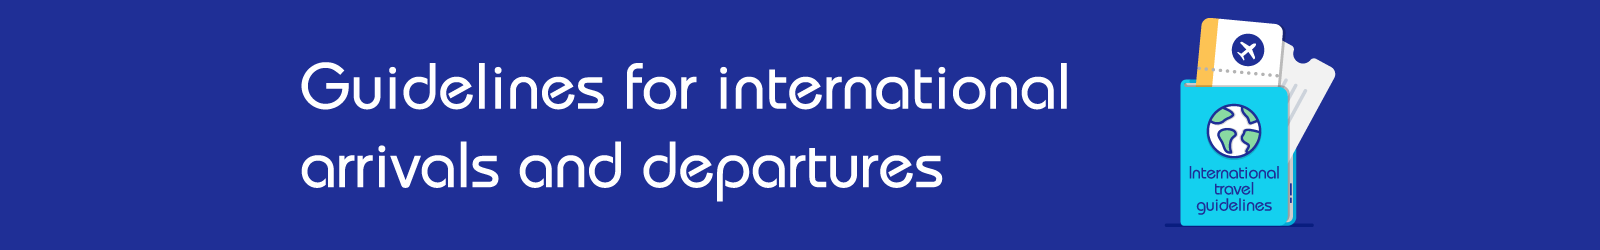 International-Travel-Guidelines-LP